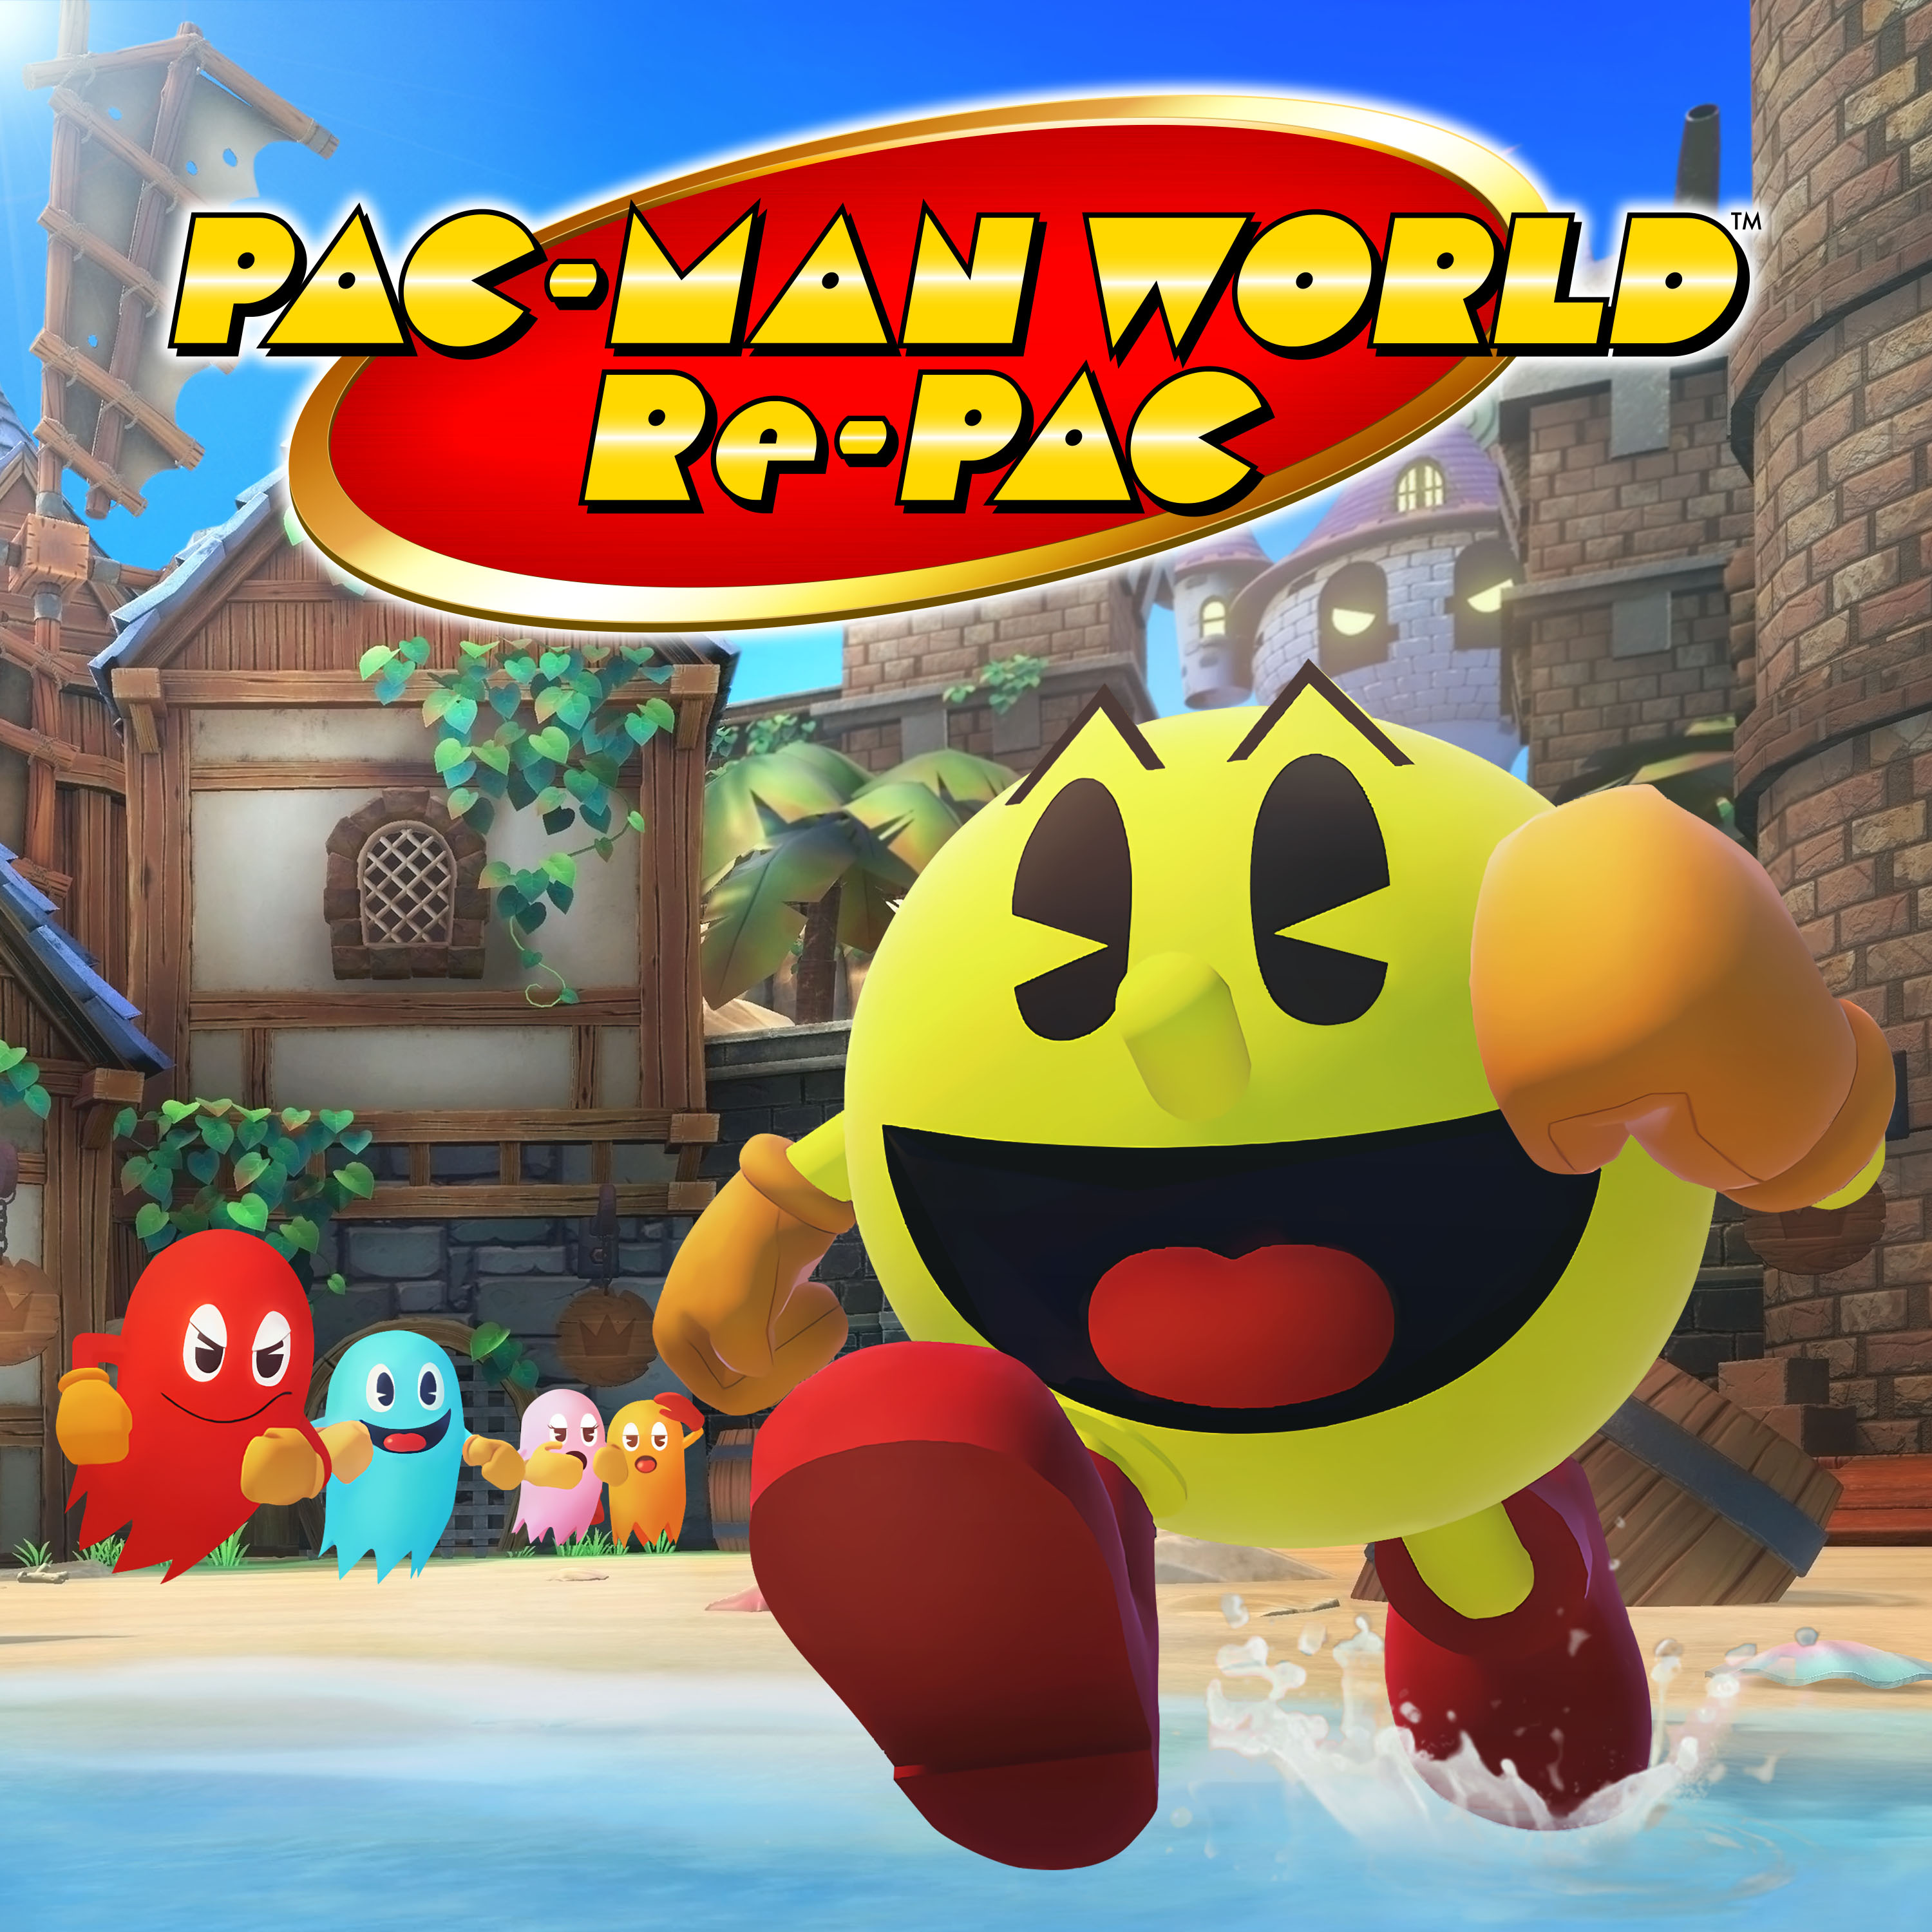 PAC-MAN WORLD: Re-PAC